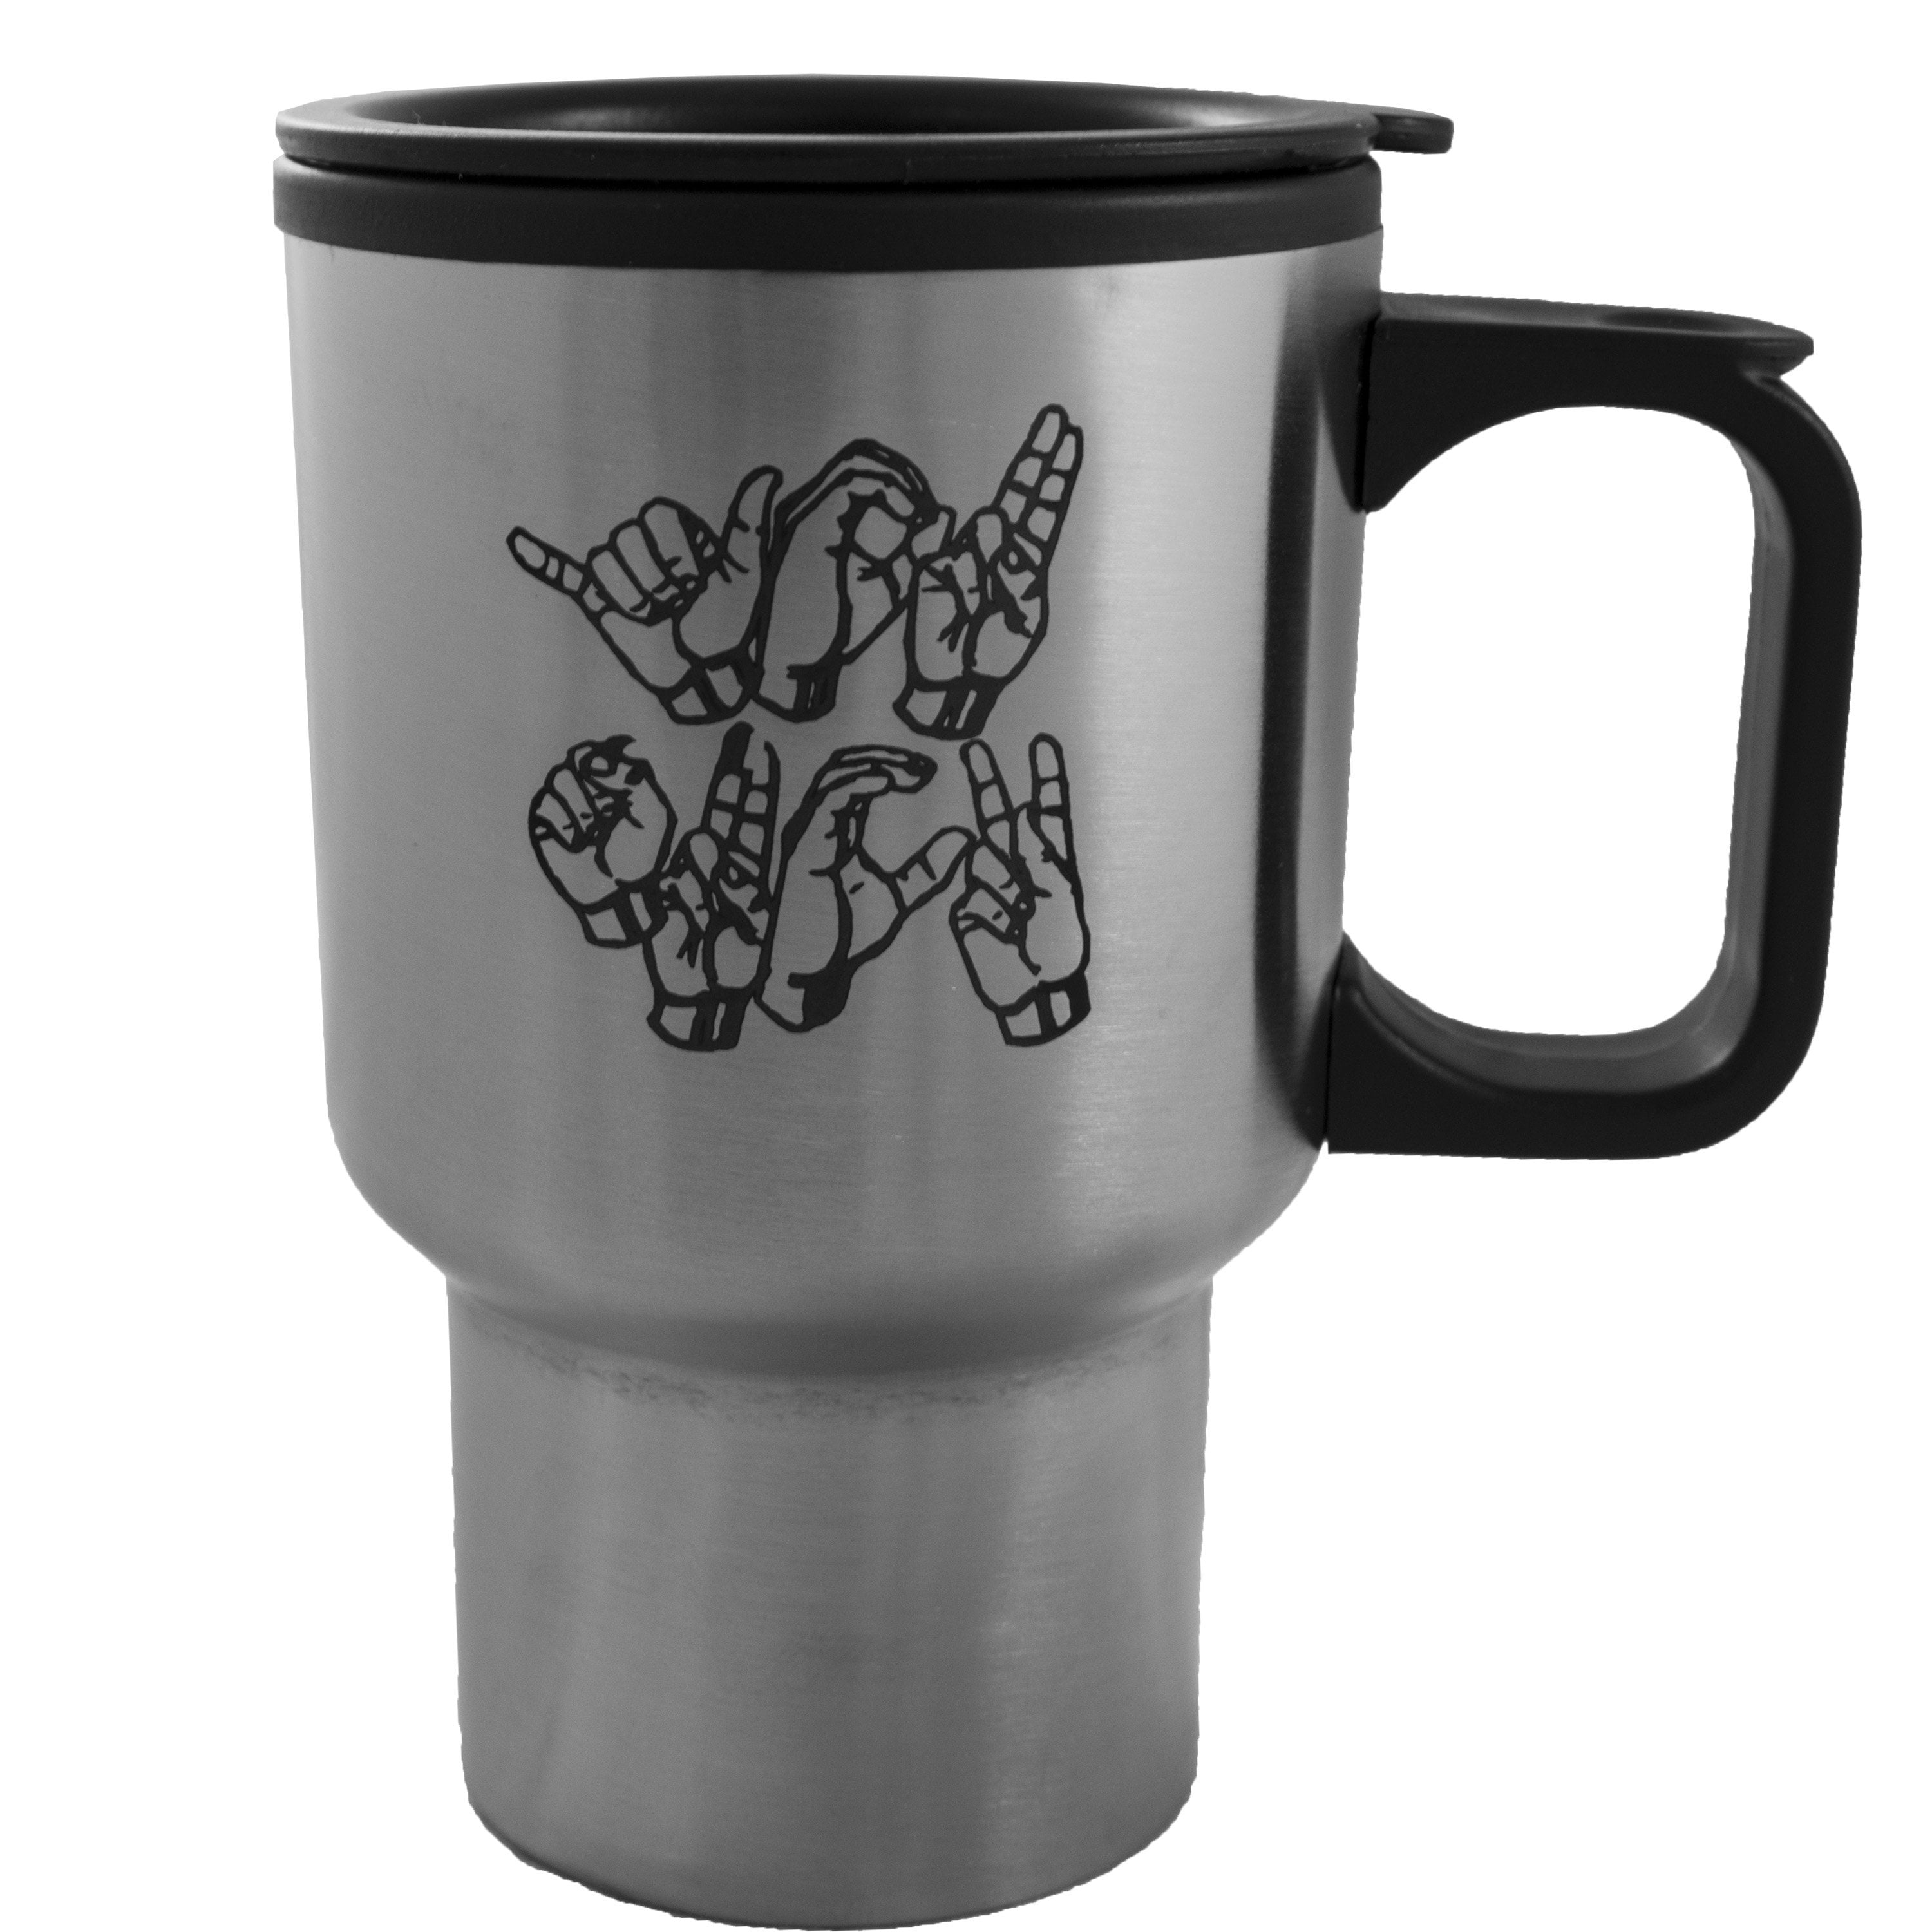 Texsport Stainless Steel 16 Oz Coffee Cup Mug 13420